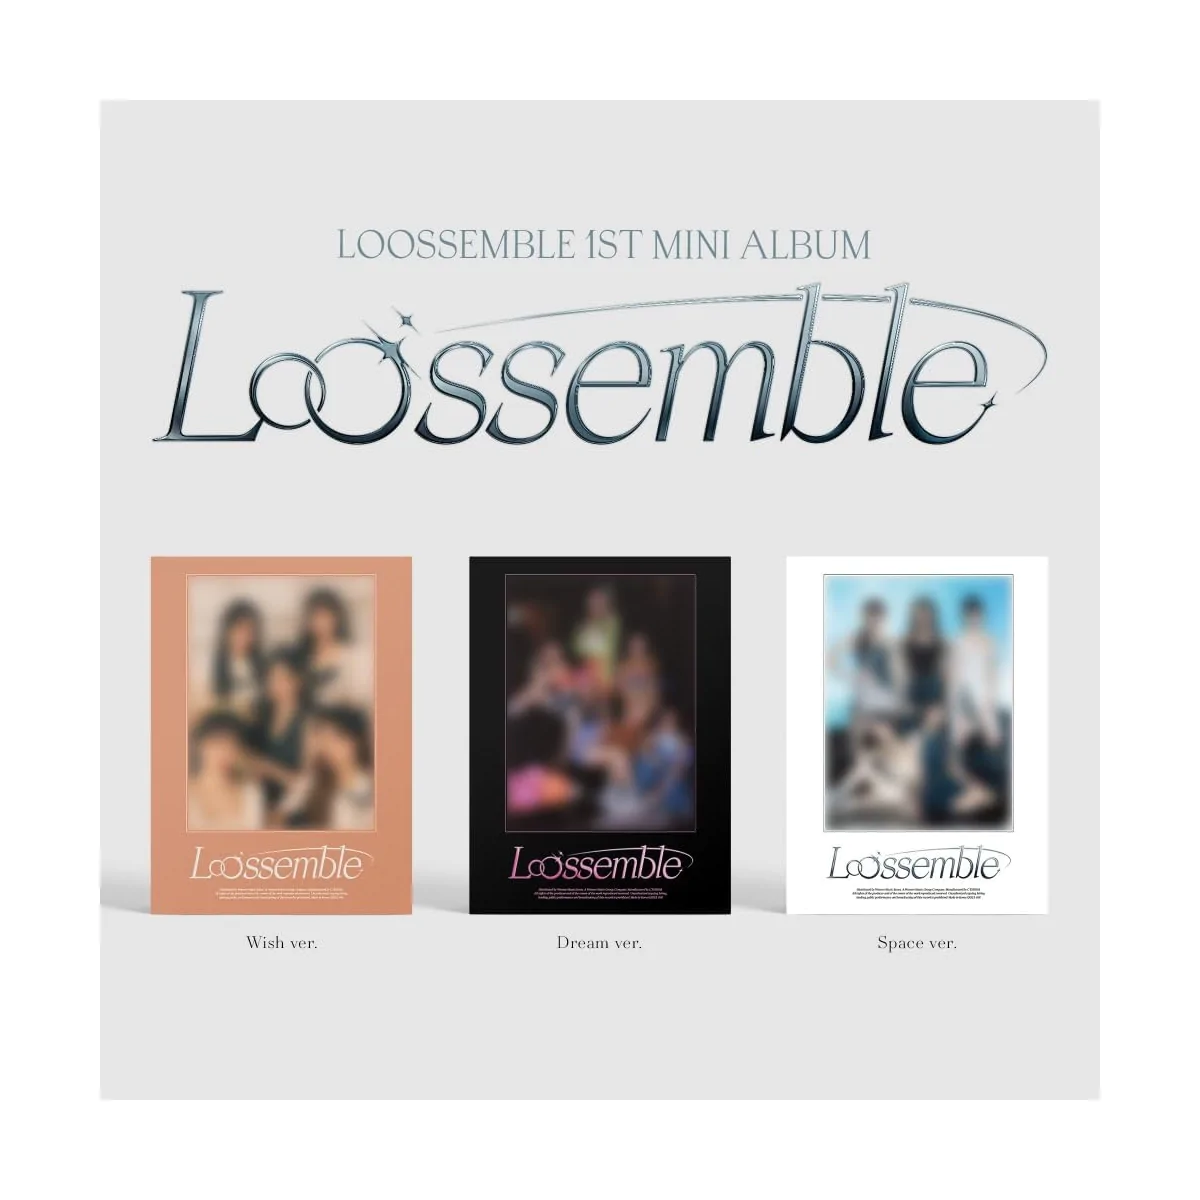 Loossemble - Loossemble (Dream Version) (1st Mini Album) 